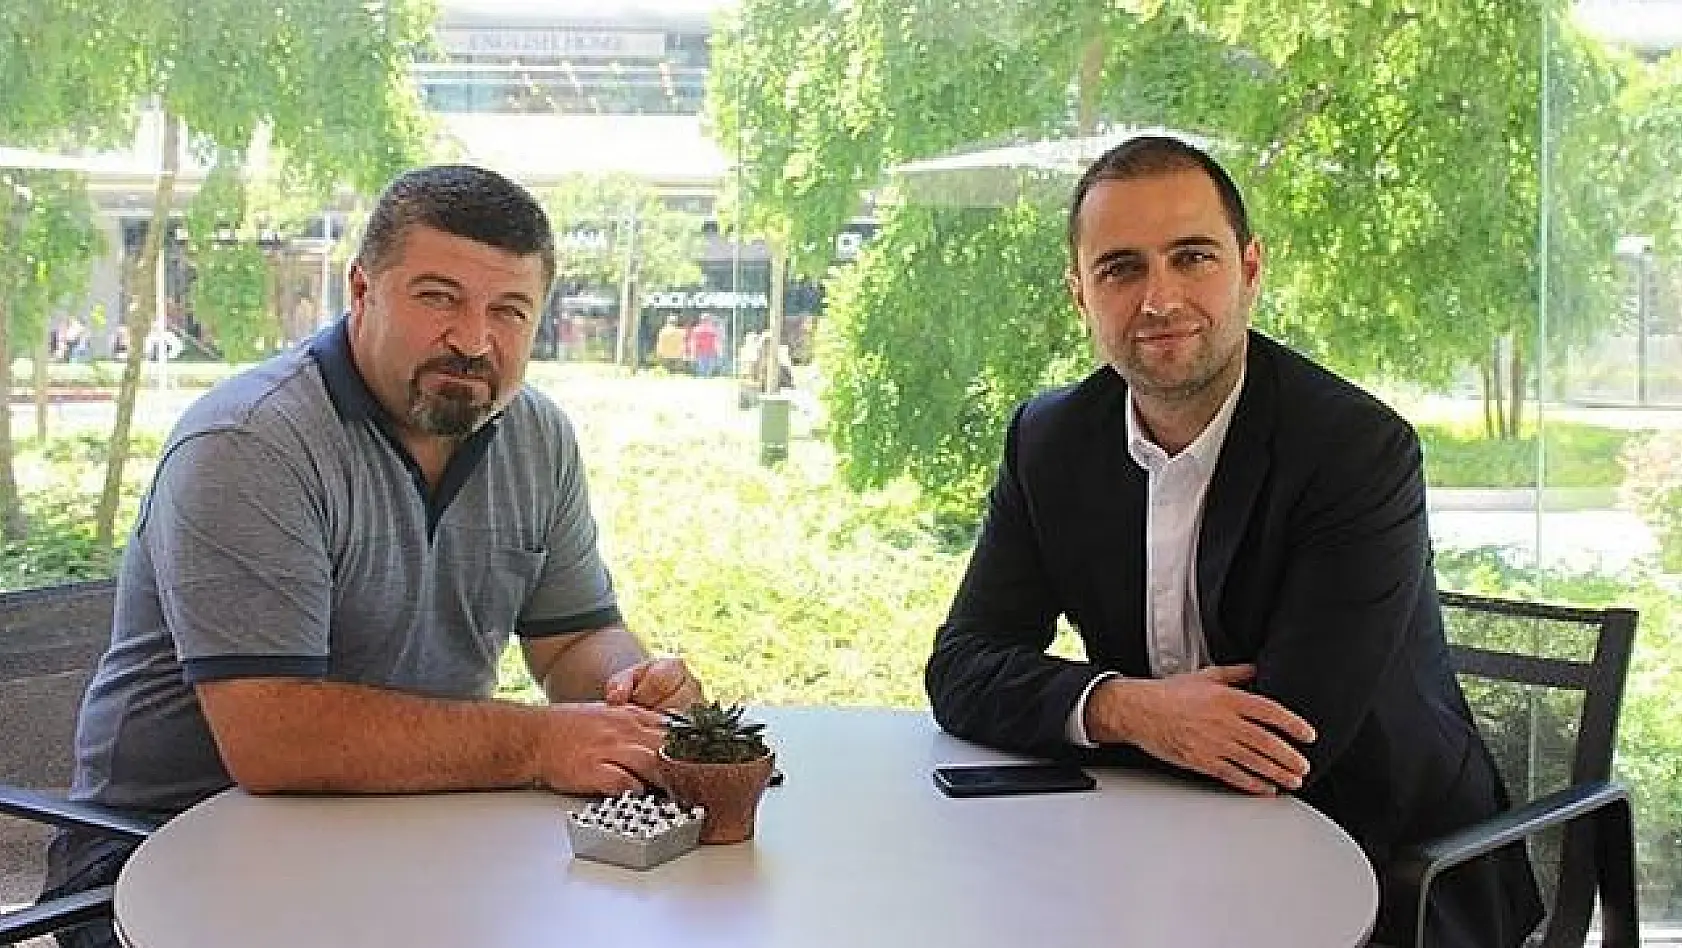 '50 Kart satan Elazığspor'a 50 kart parası veriliyor'